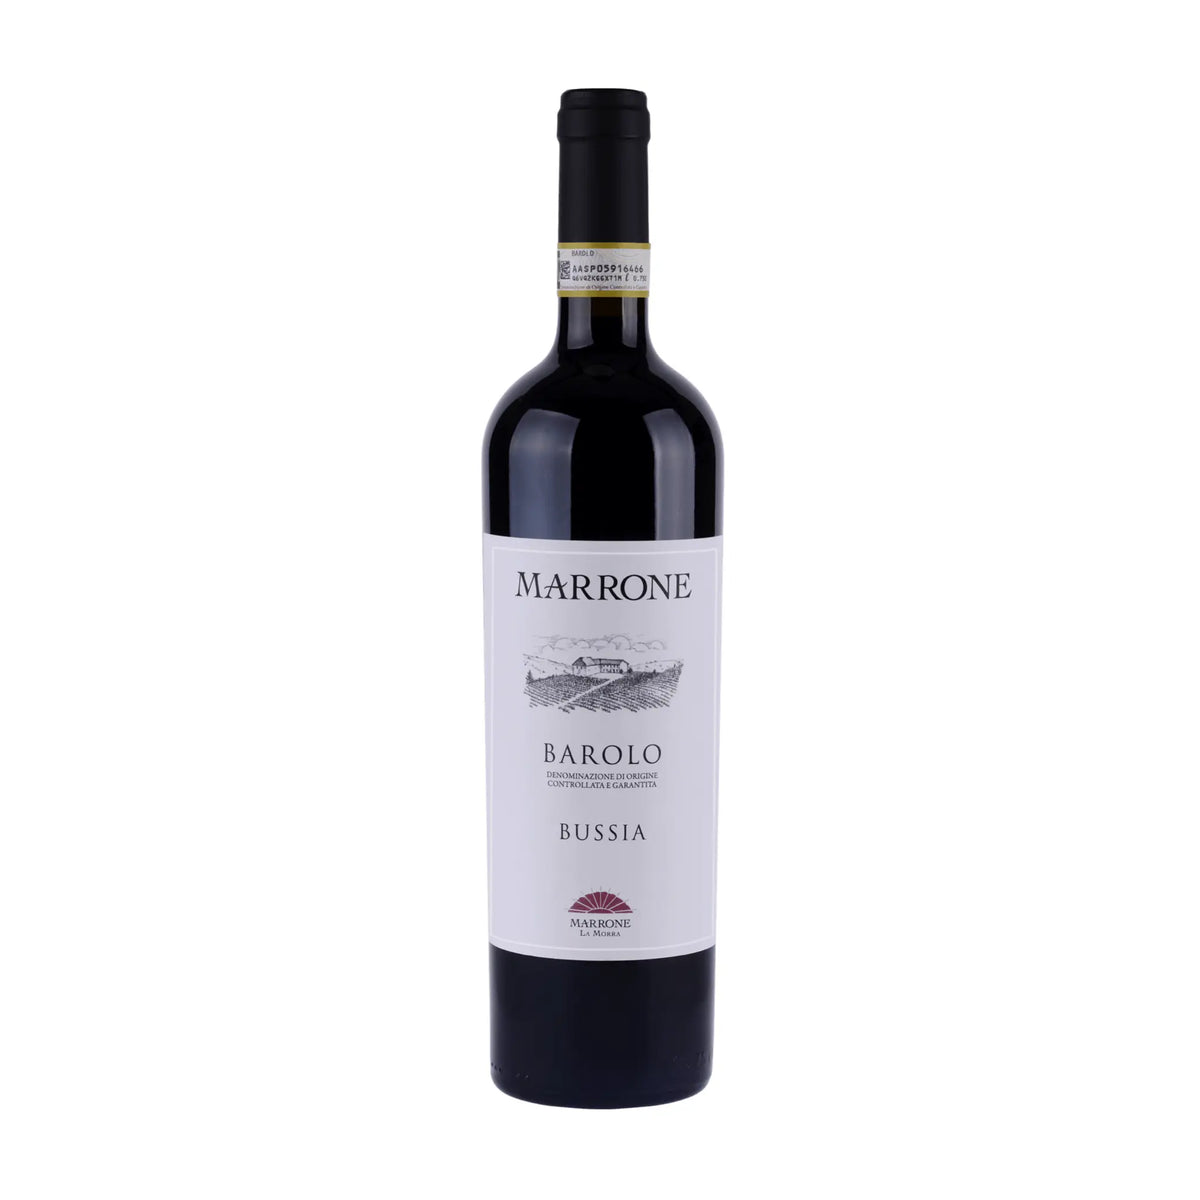 Marrone-Rotwein-Nebbiolo-Piemont-Italien-Bussia Barolo DOCG-WINECOM